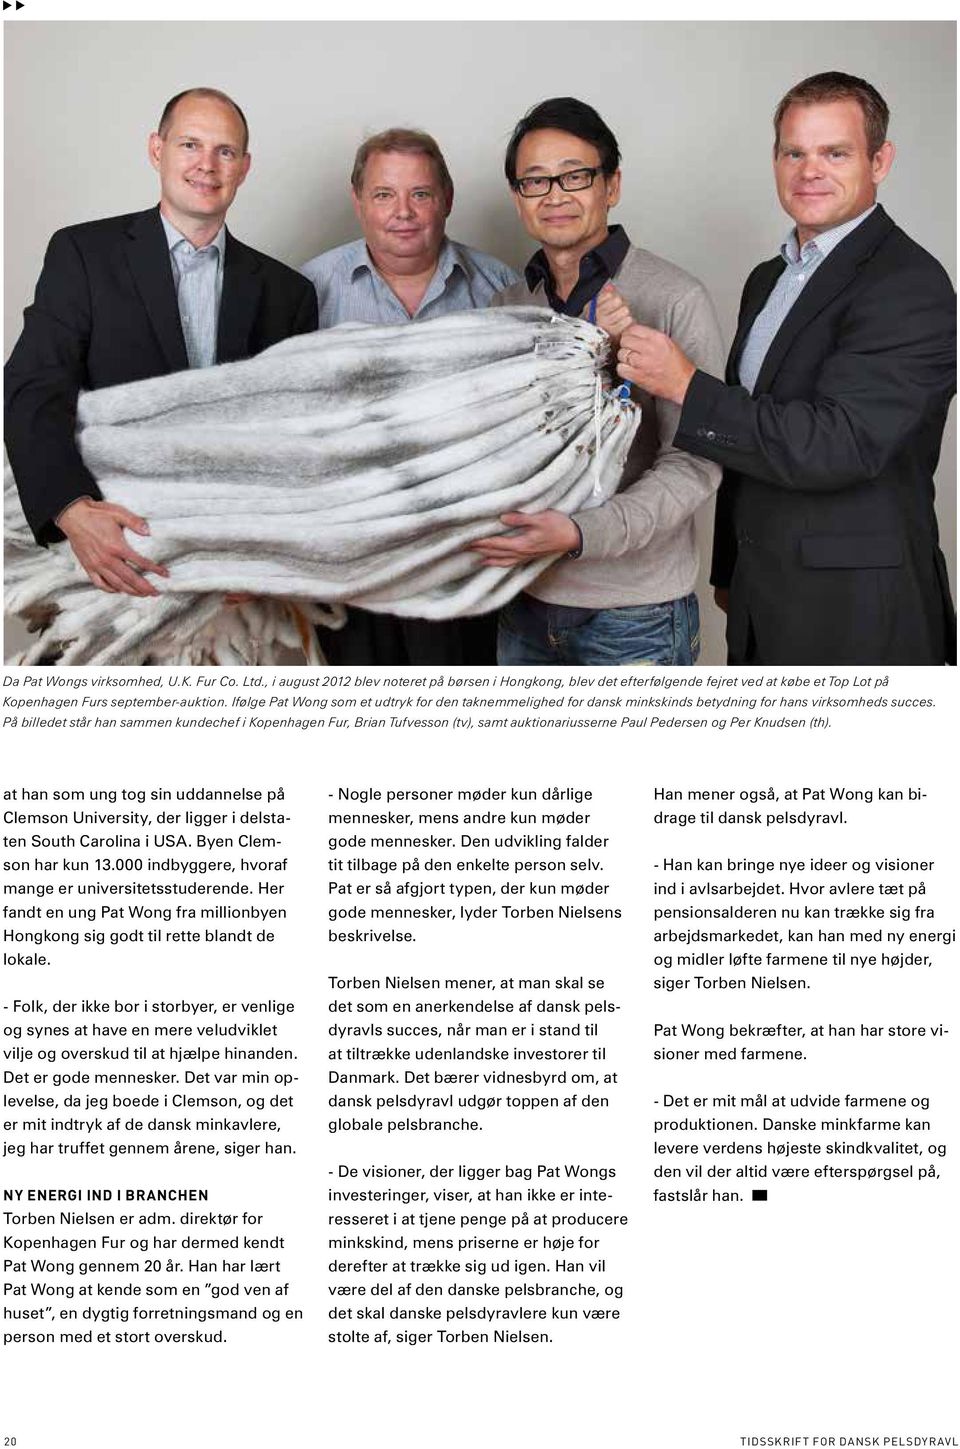 På billedet står han sammen kundechef i Kopenhagen Fur, Brian Tufvesson (tv), samt auktionariusserne Paul Pedersen og Per Knudsen (th).